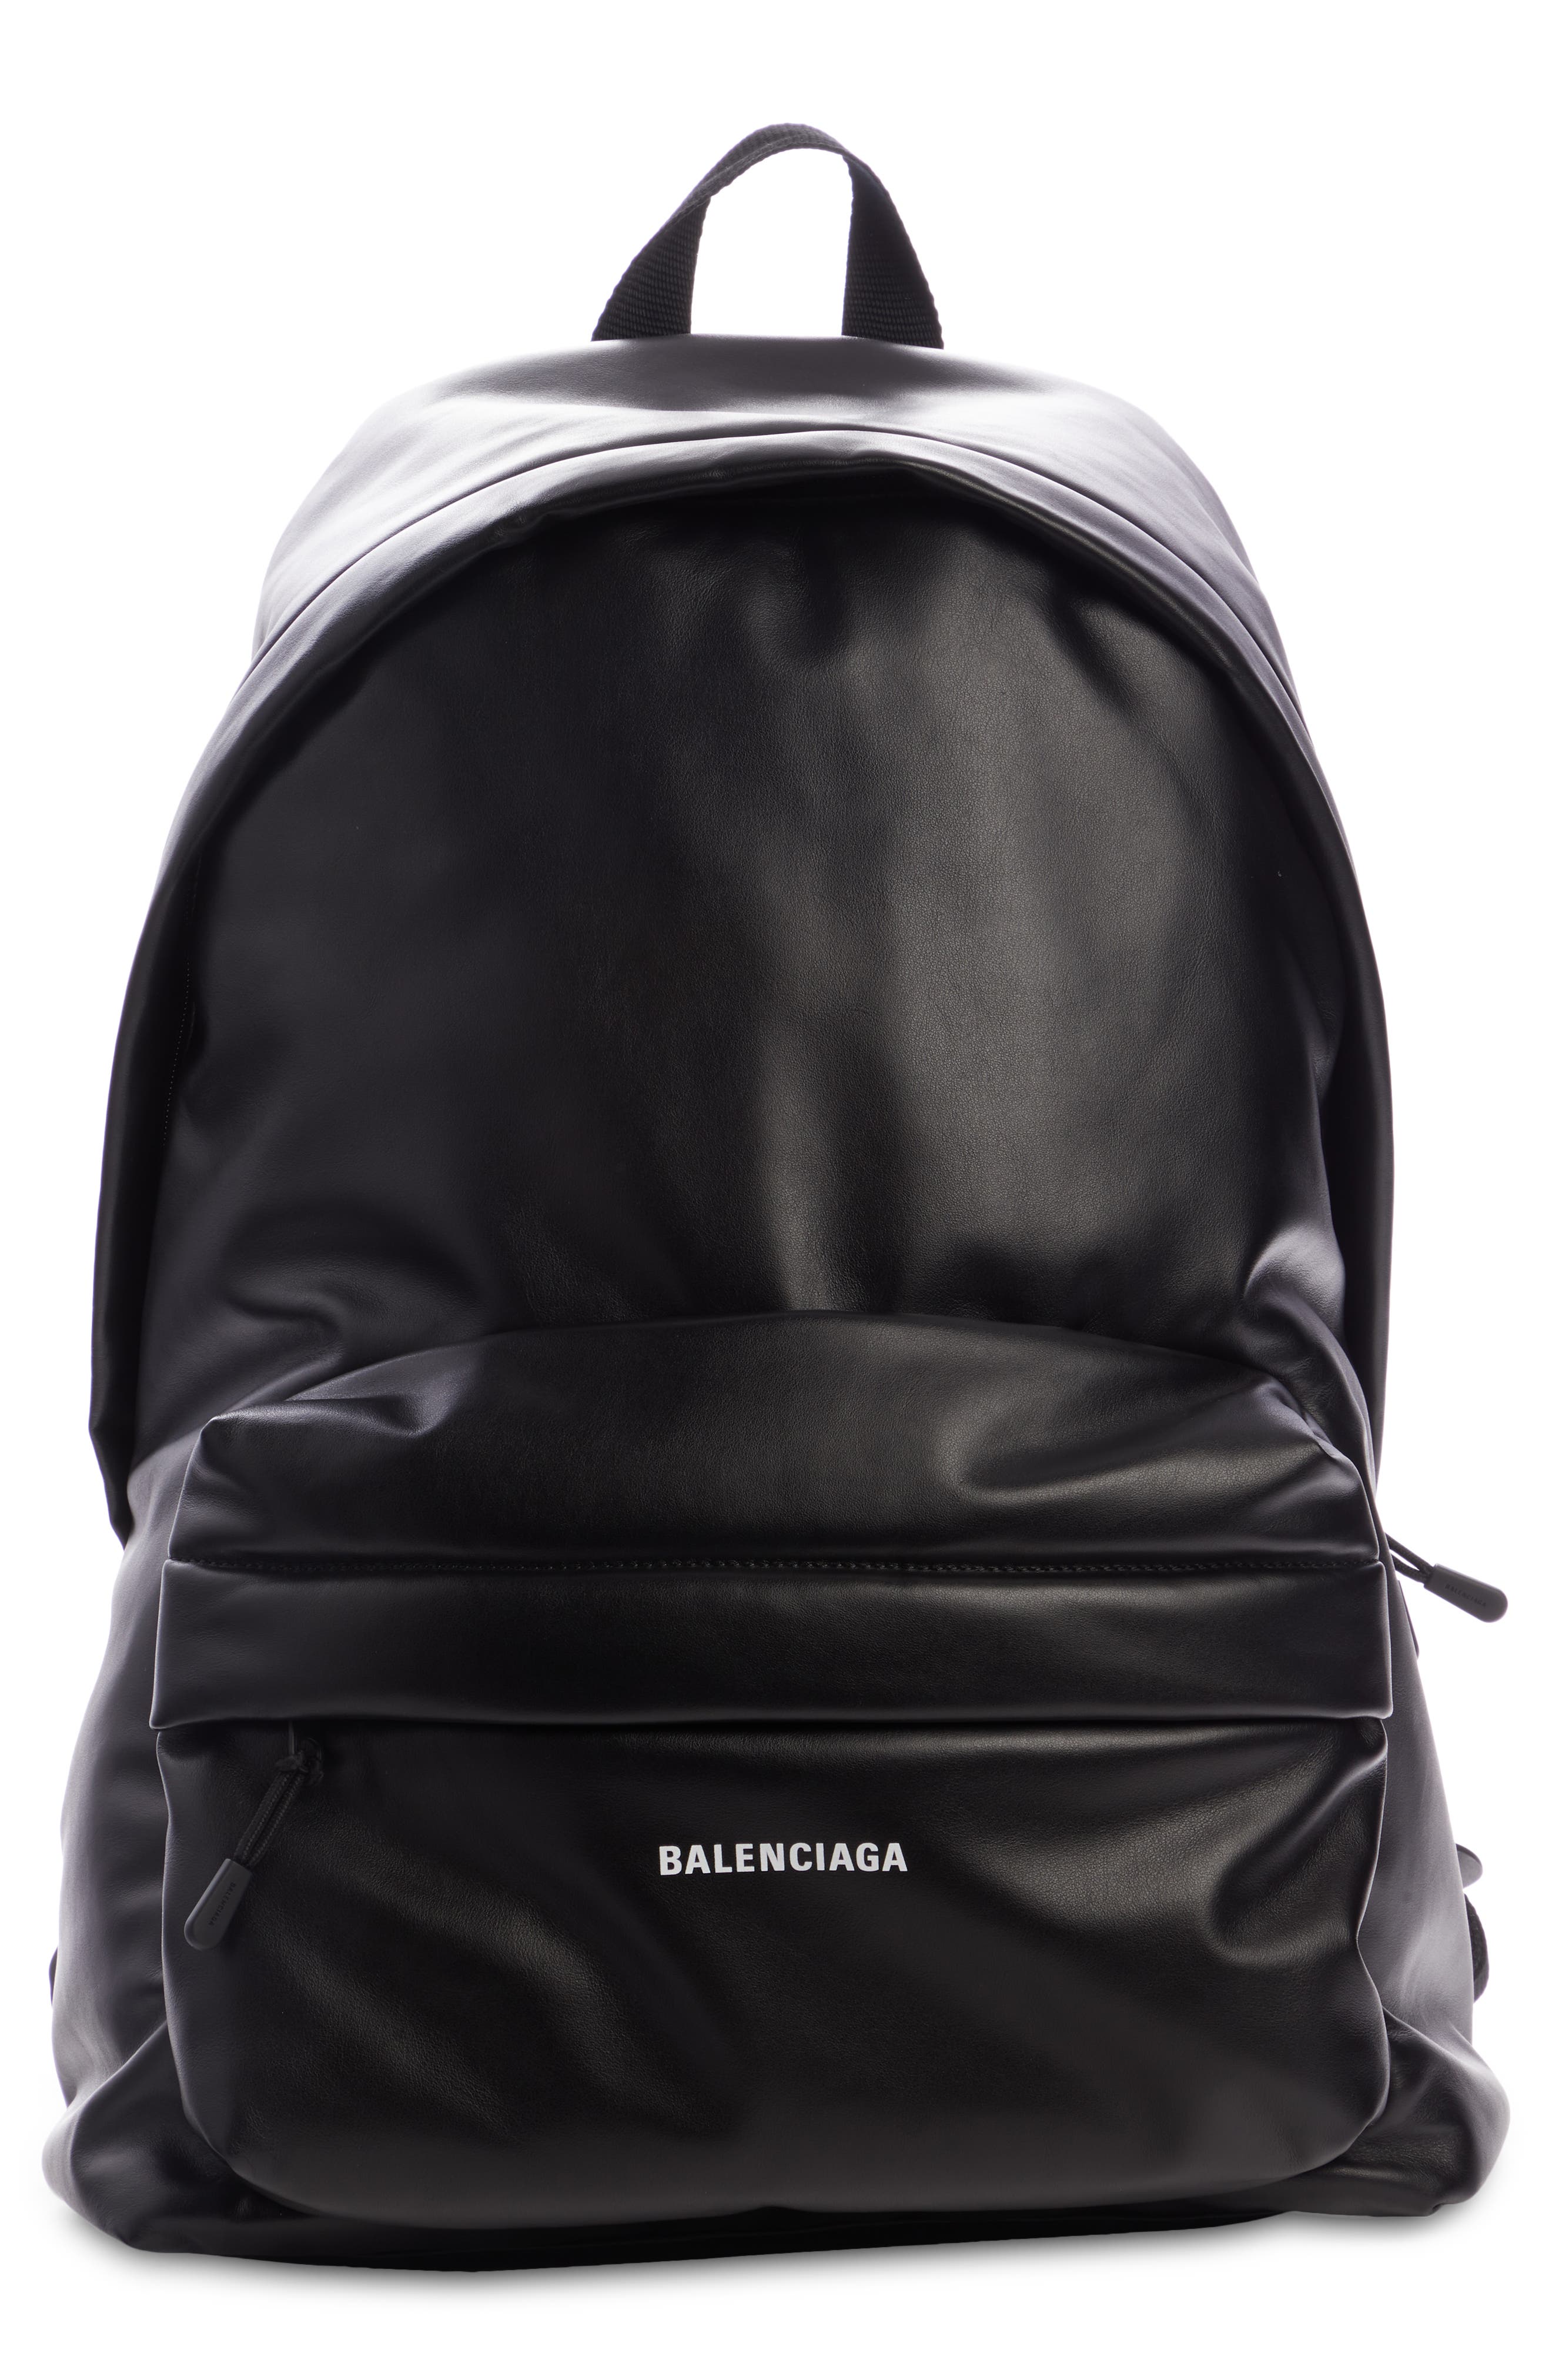 Balenciaga Puffy Leather Backpack in Black